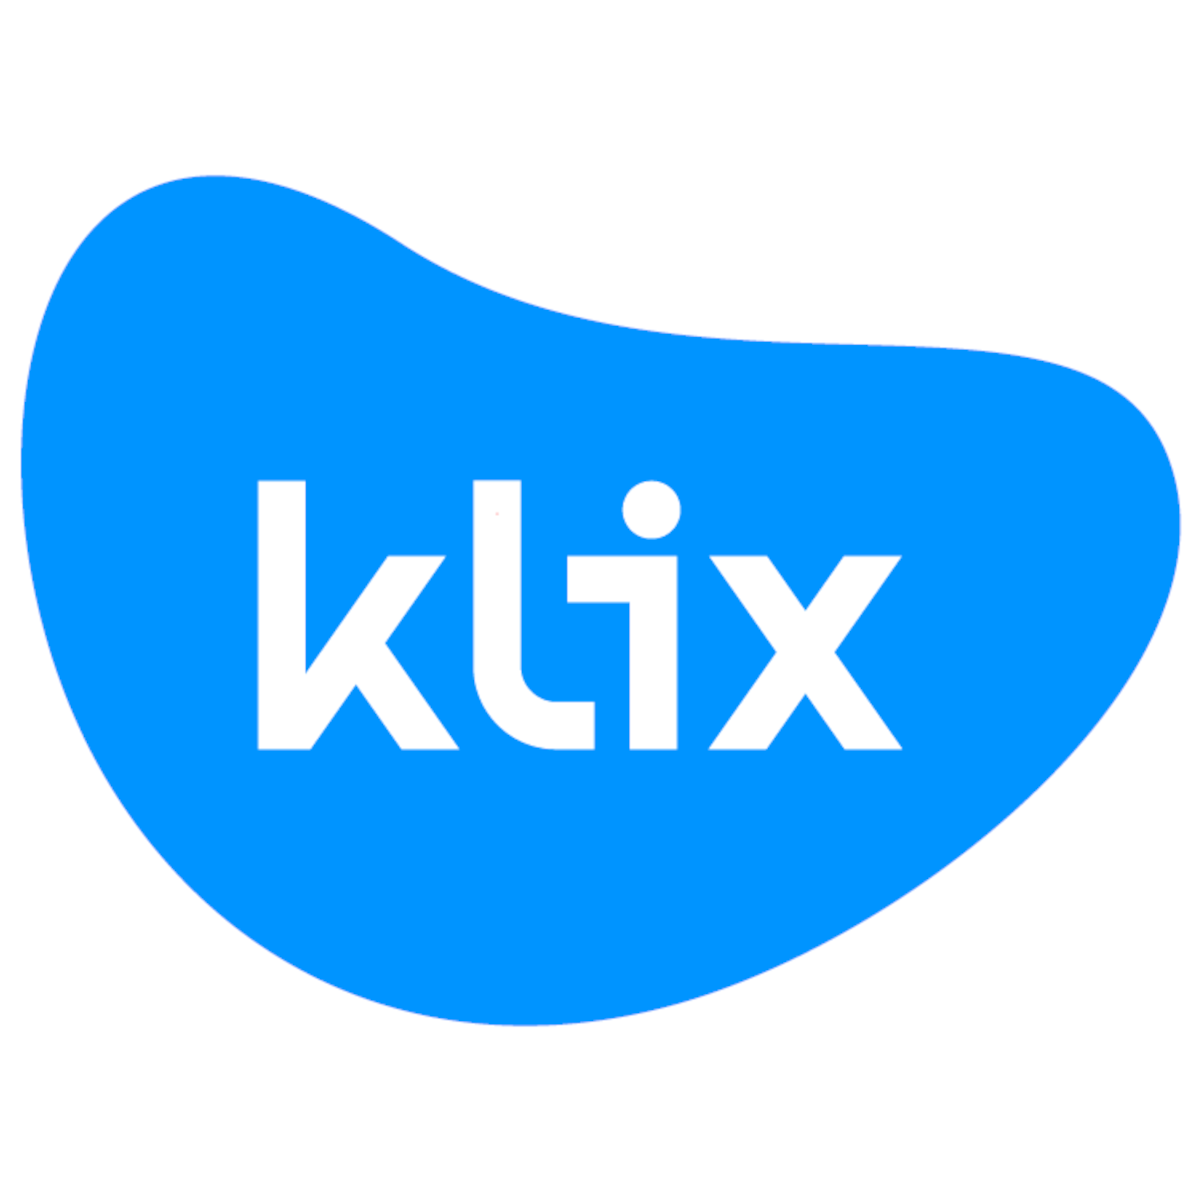 Klix payments